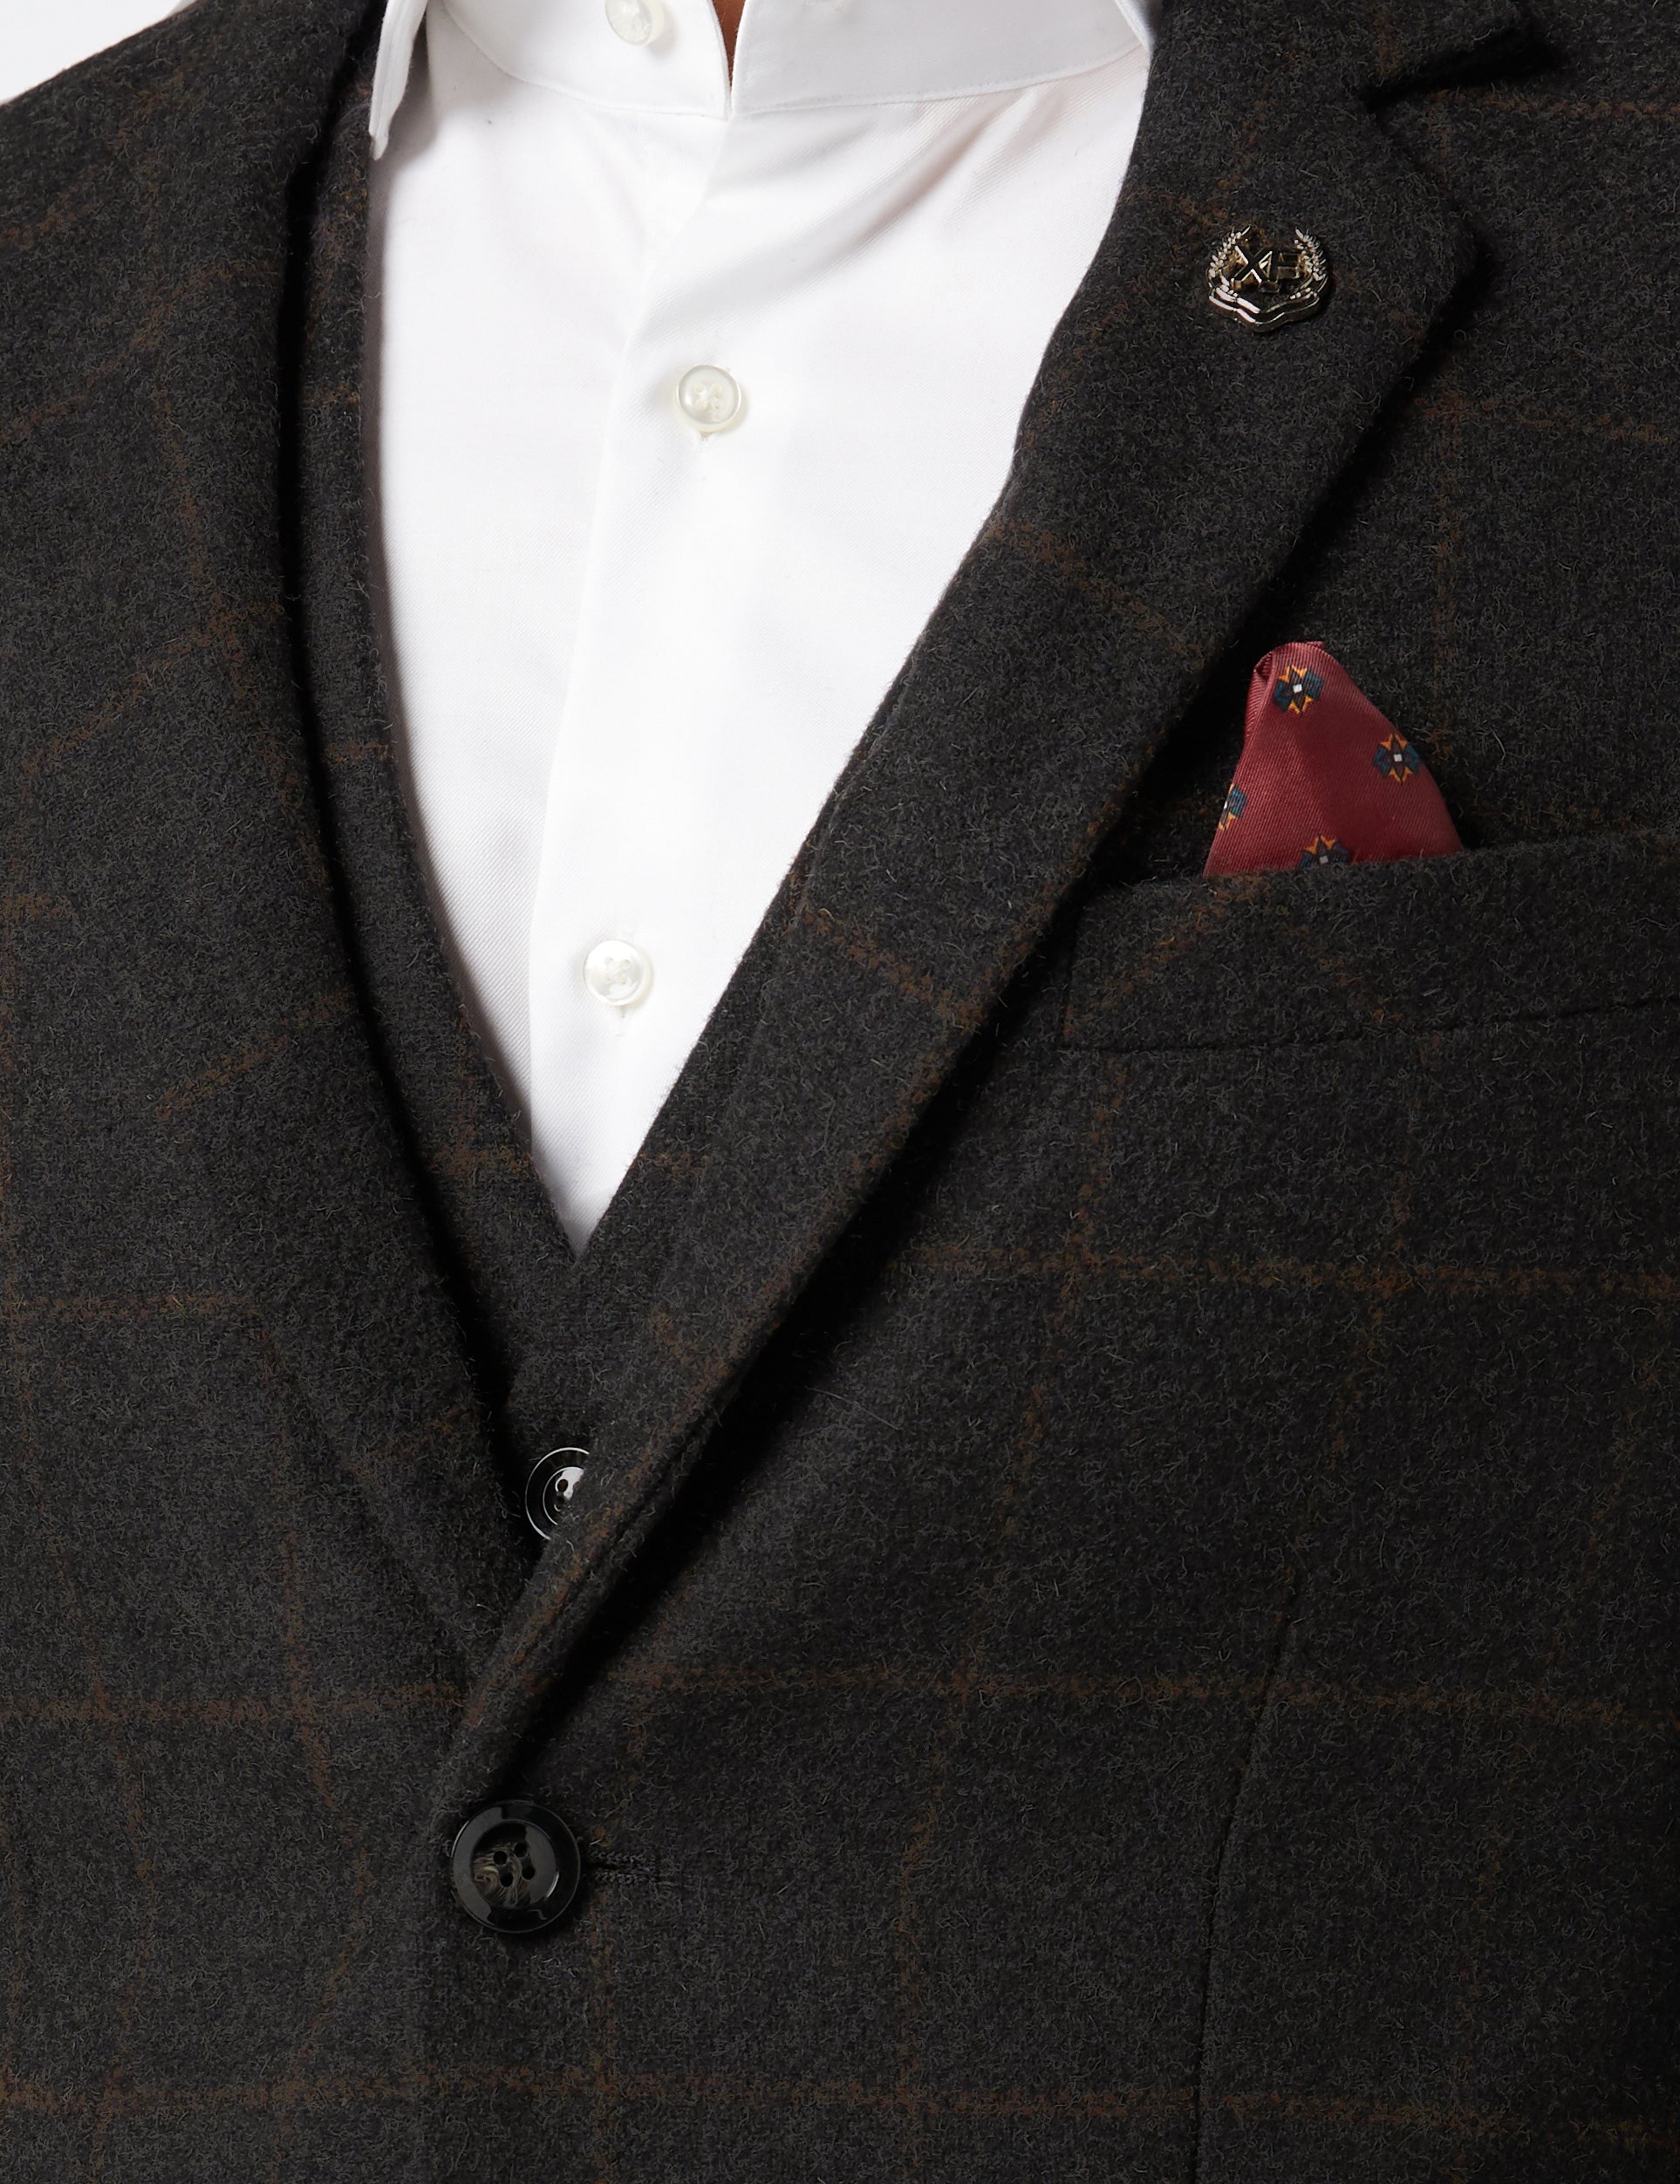 Mens 3 Piece Suit Herringbone Tweed Grey Black Check Retro Fitted